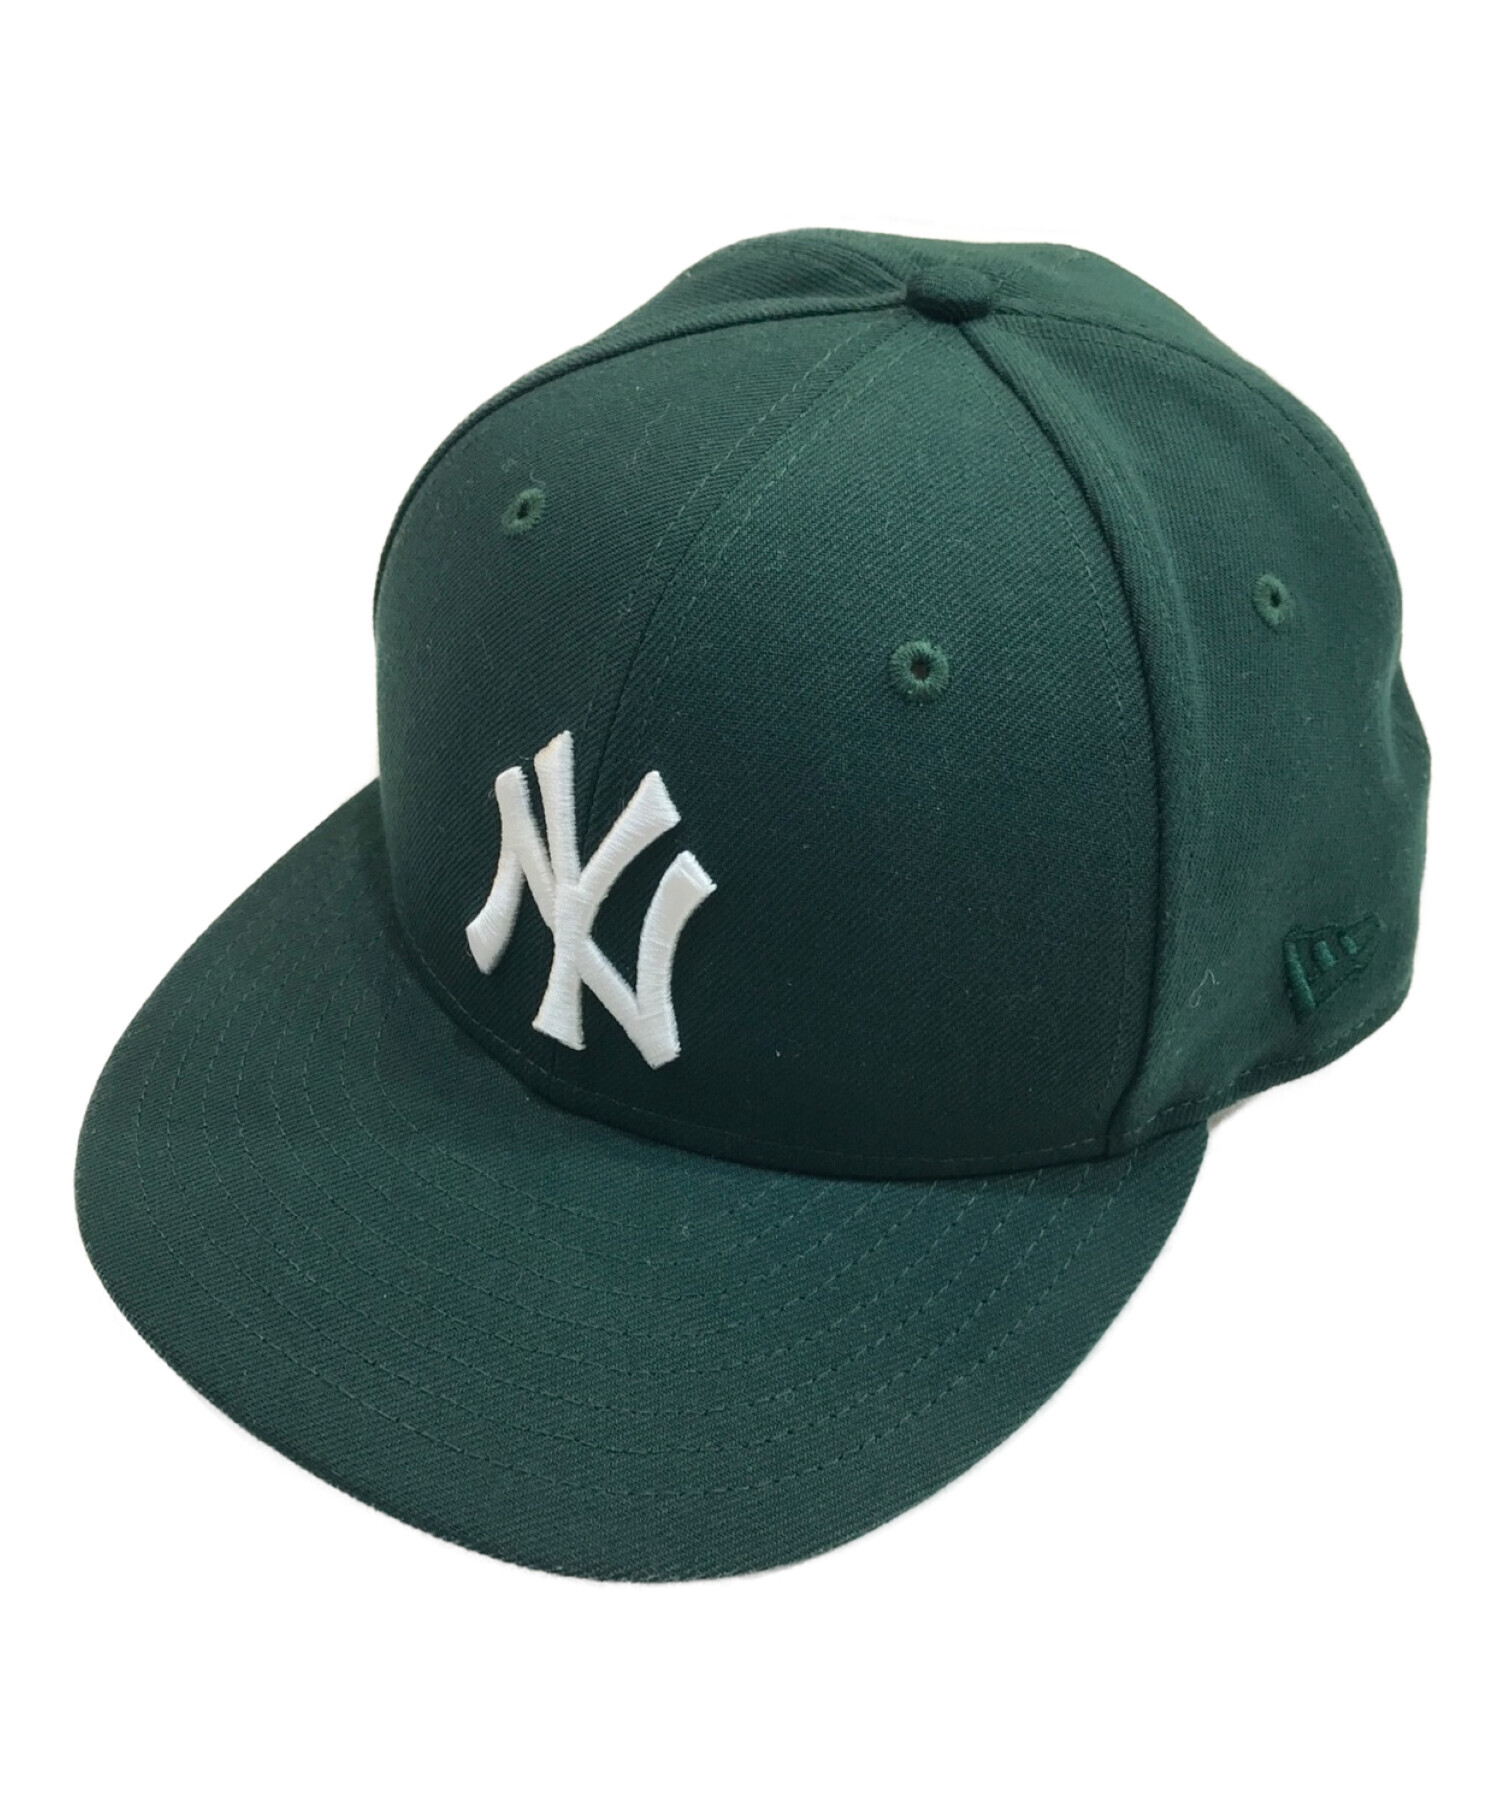 New Era (ニューエラ) Aime Leon Dore (エメレオンドレ) Yankees Ballpark Hat グリーン サイズ:7 4/3